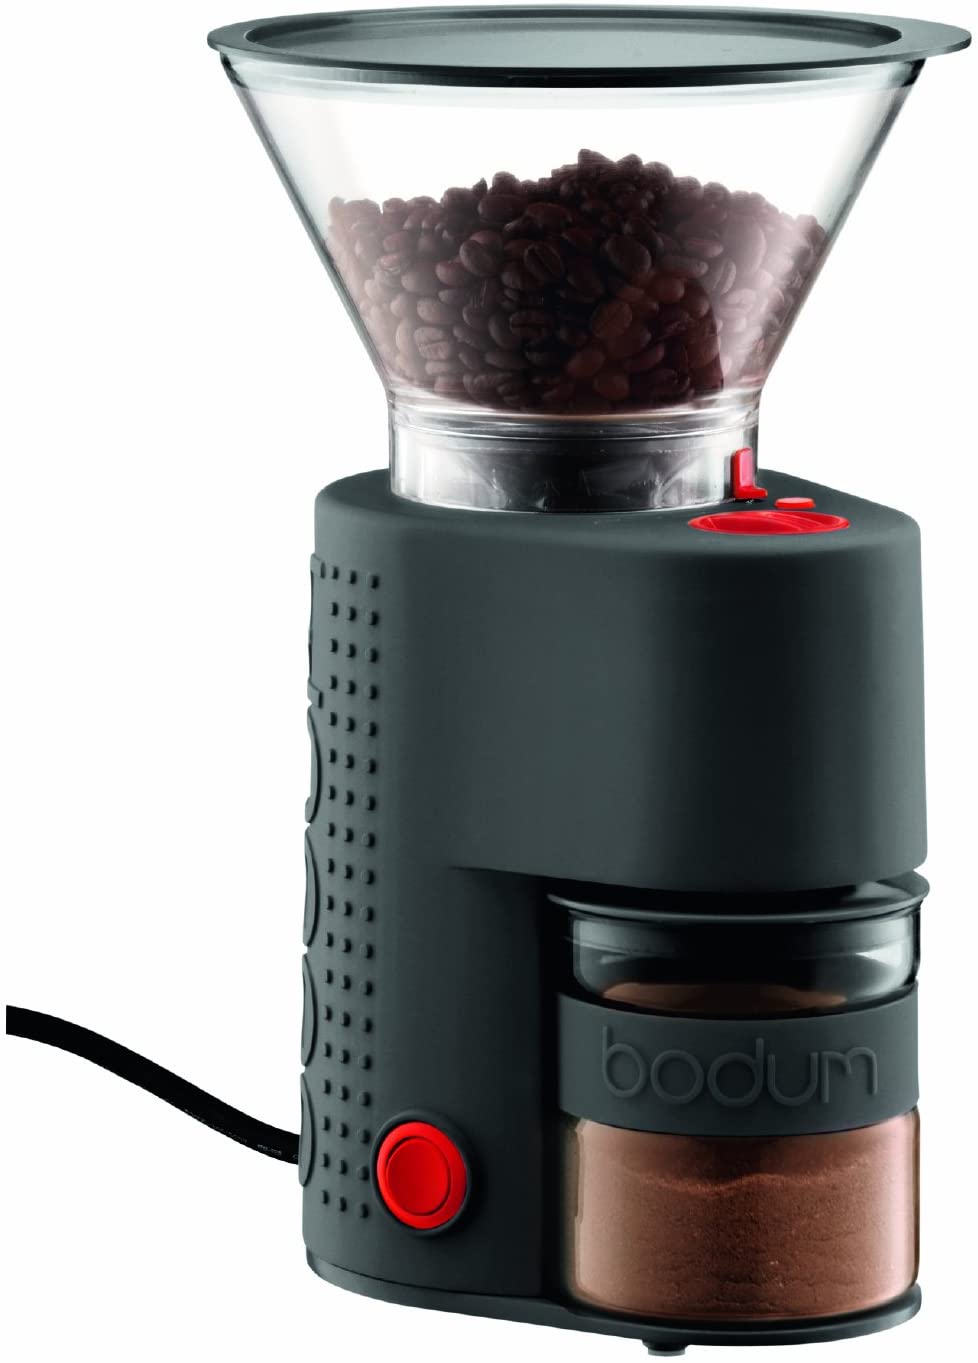 The Appliance Net: Best Entry Level Grinder? – Bodum Coffee Grinder